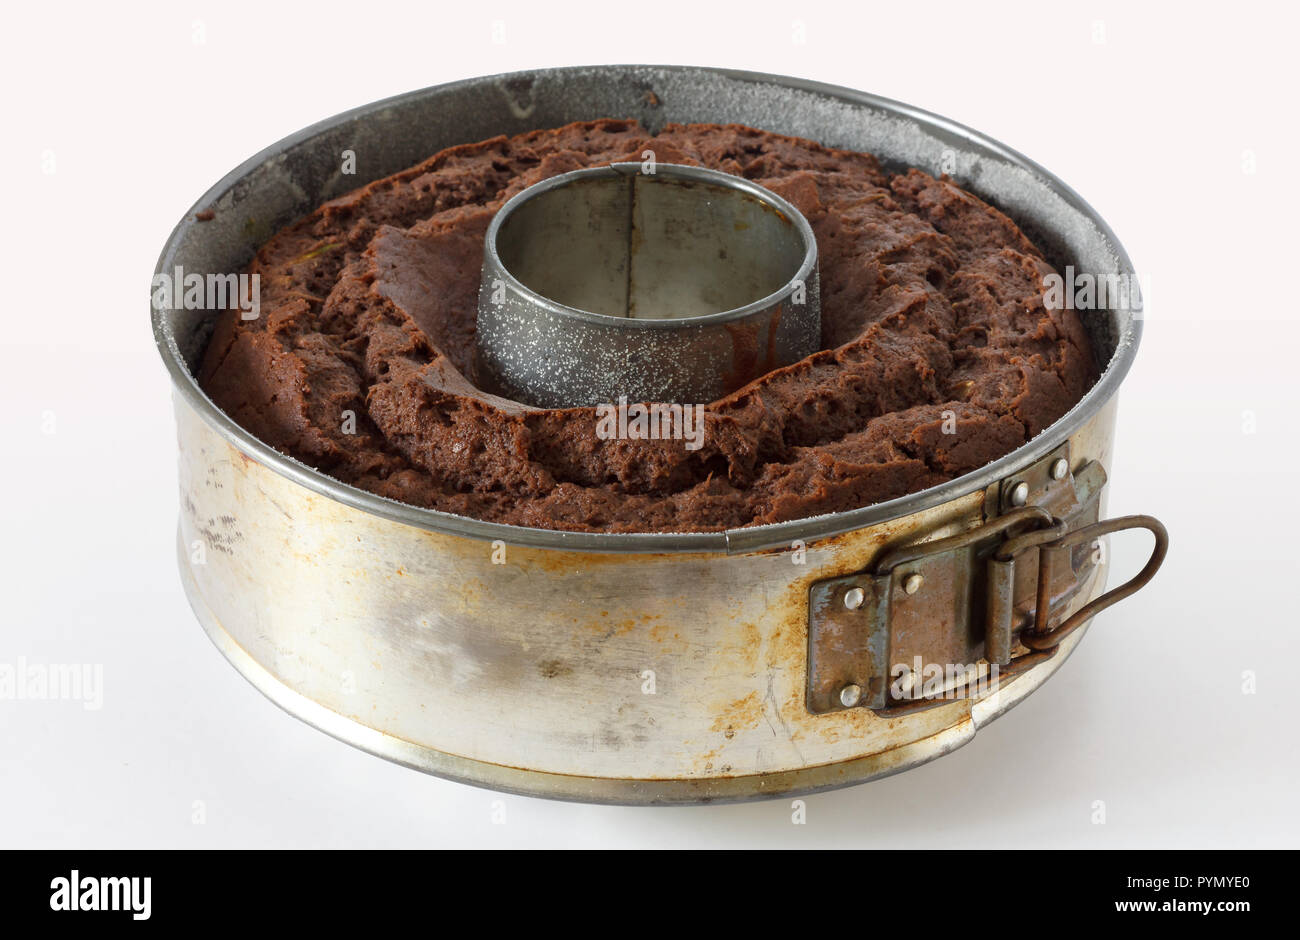 Adjustable round metal baking ring with chocolate sponge cake. Stock Photo